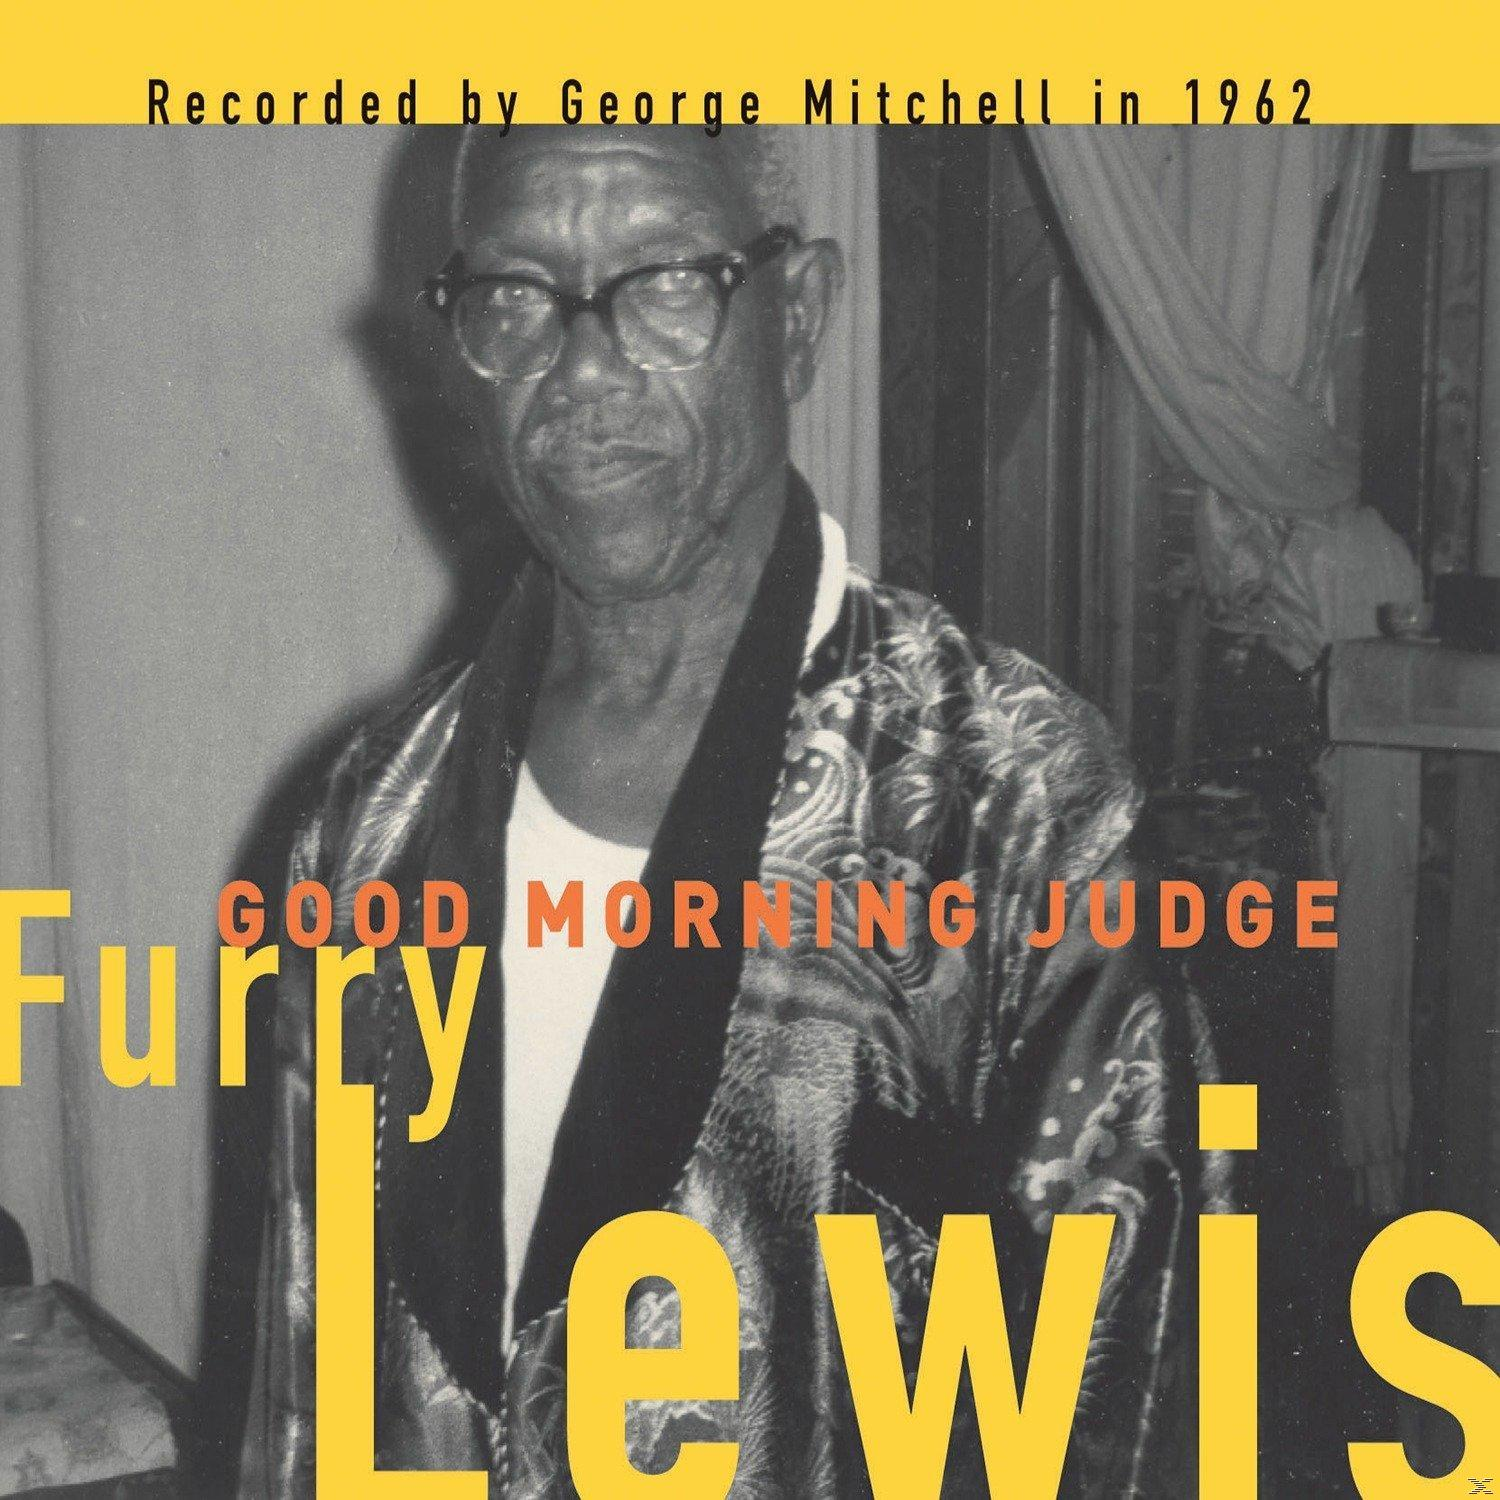 Furry Lewis - Good Morning - Judge (Vinyl)